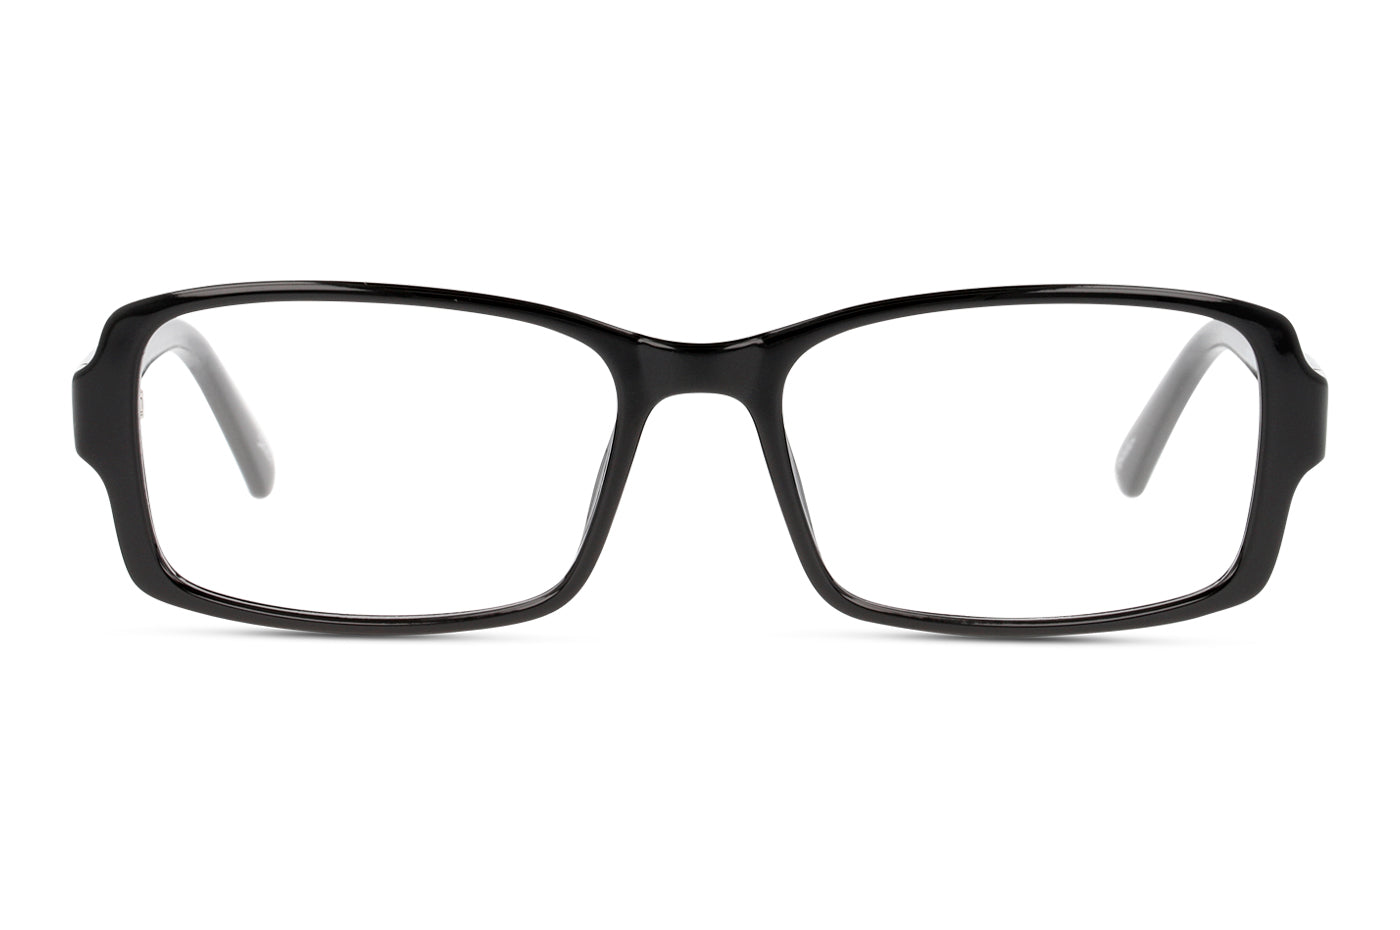 Vista-1 - Gafas oftálmicas Seen BP_SNKF01 Mujer Color Negro / Incluye lentes filtro luz azul violeta